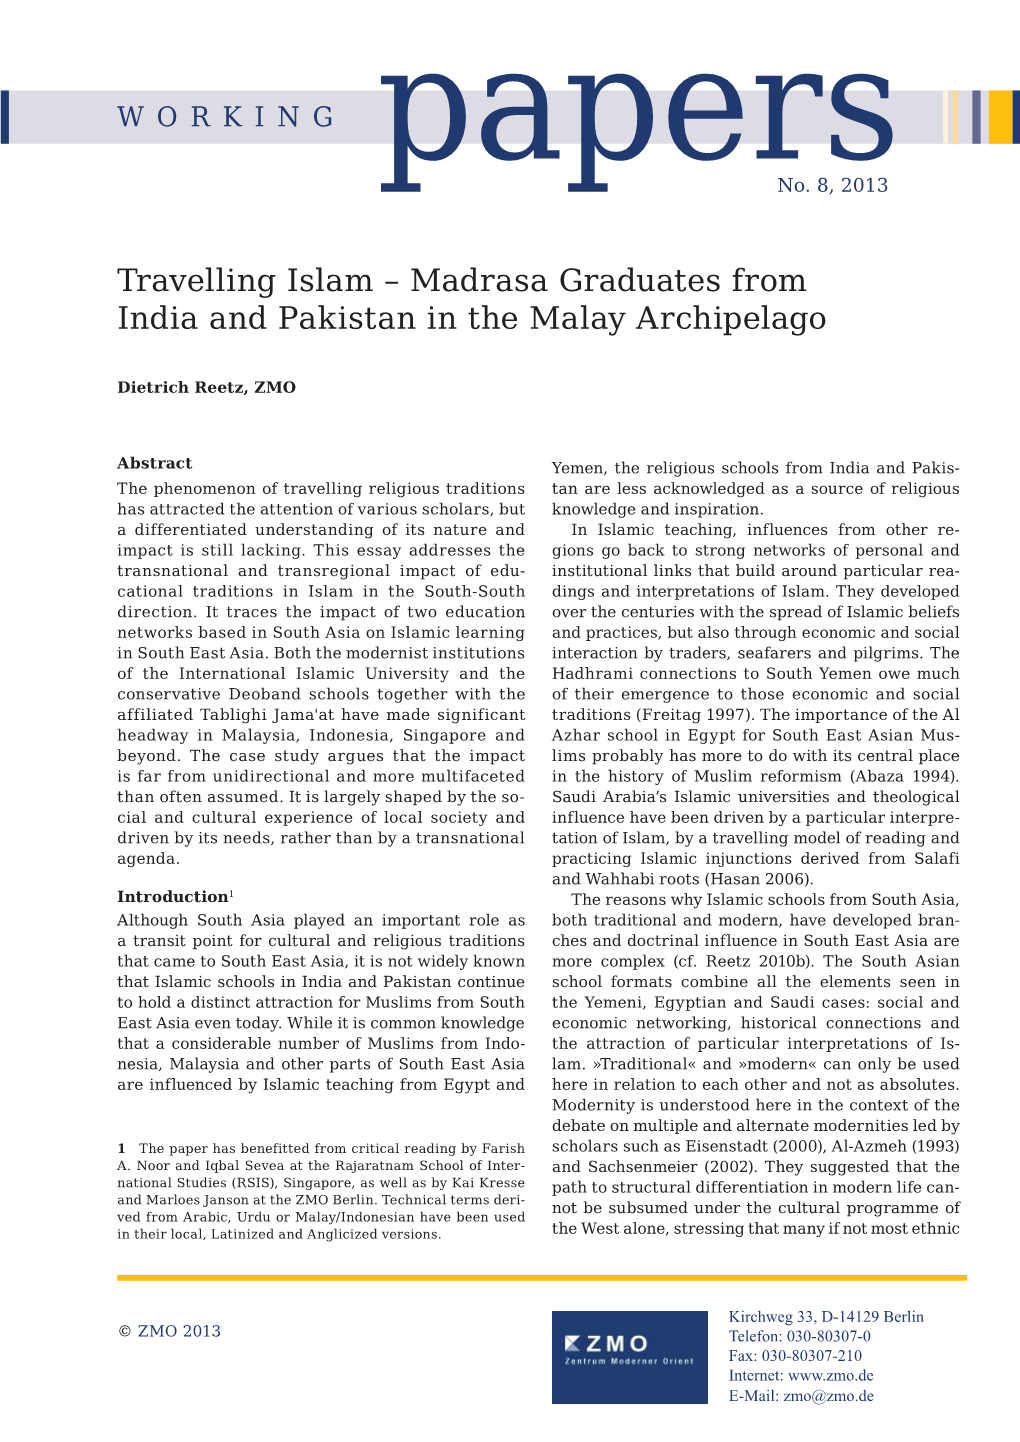 Travelling Islam – Madrasa Graduates from India and Pakistan in the Malay Archipelago